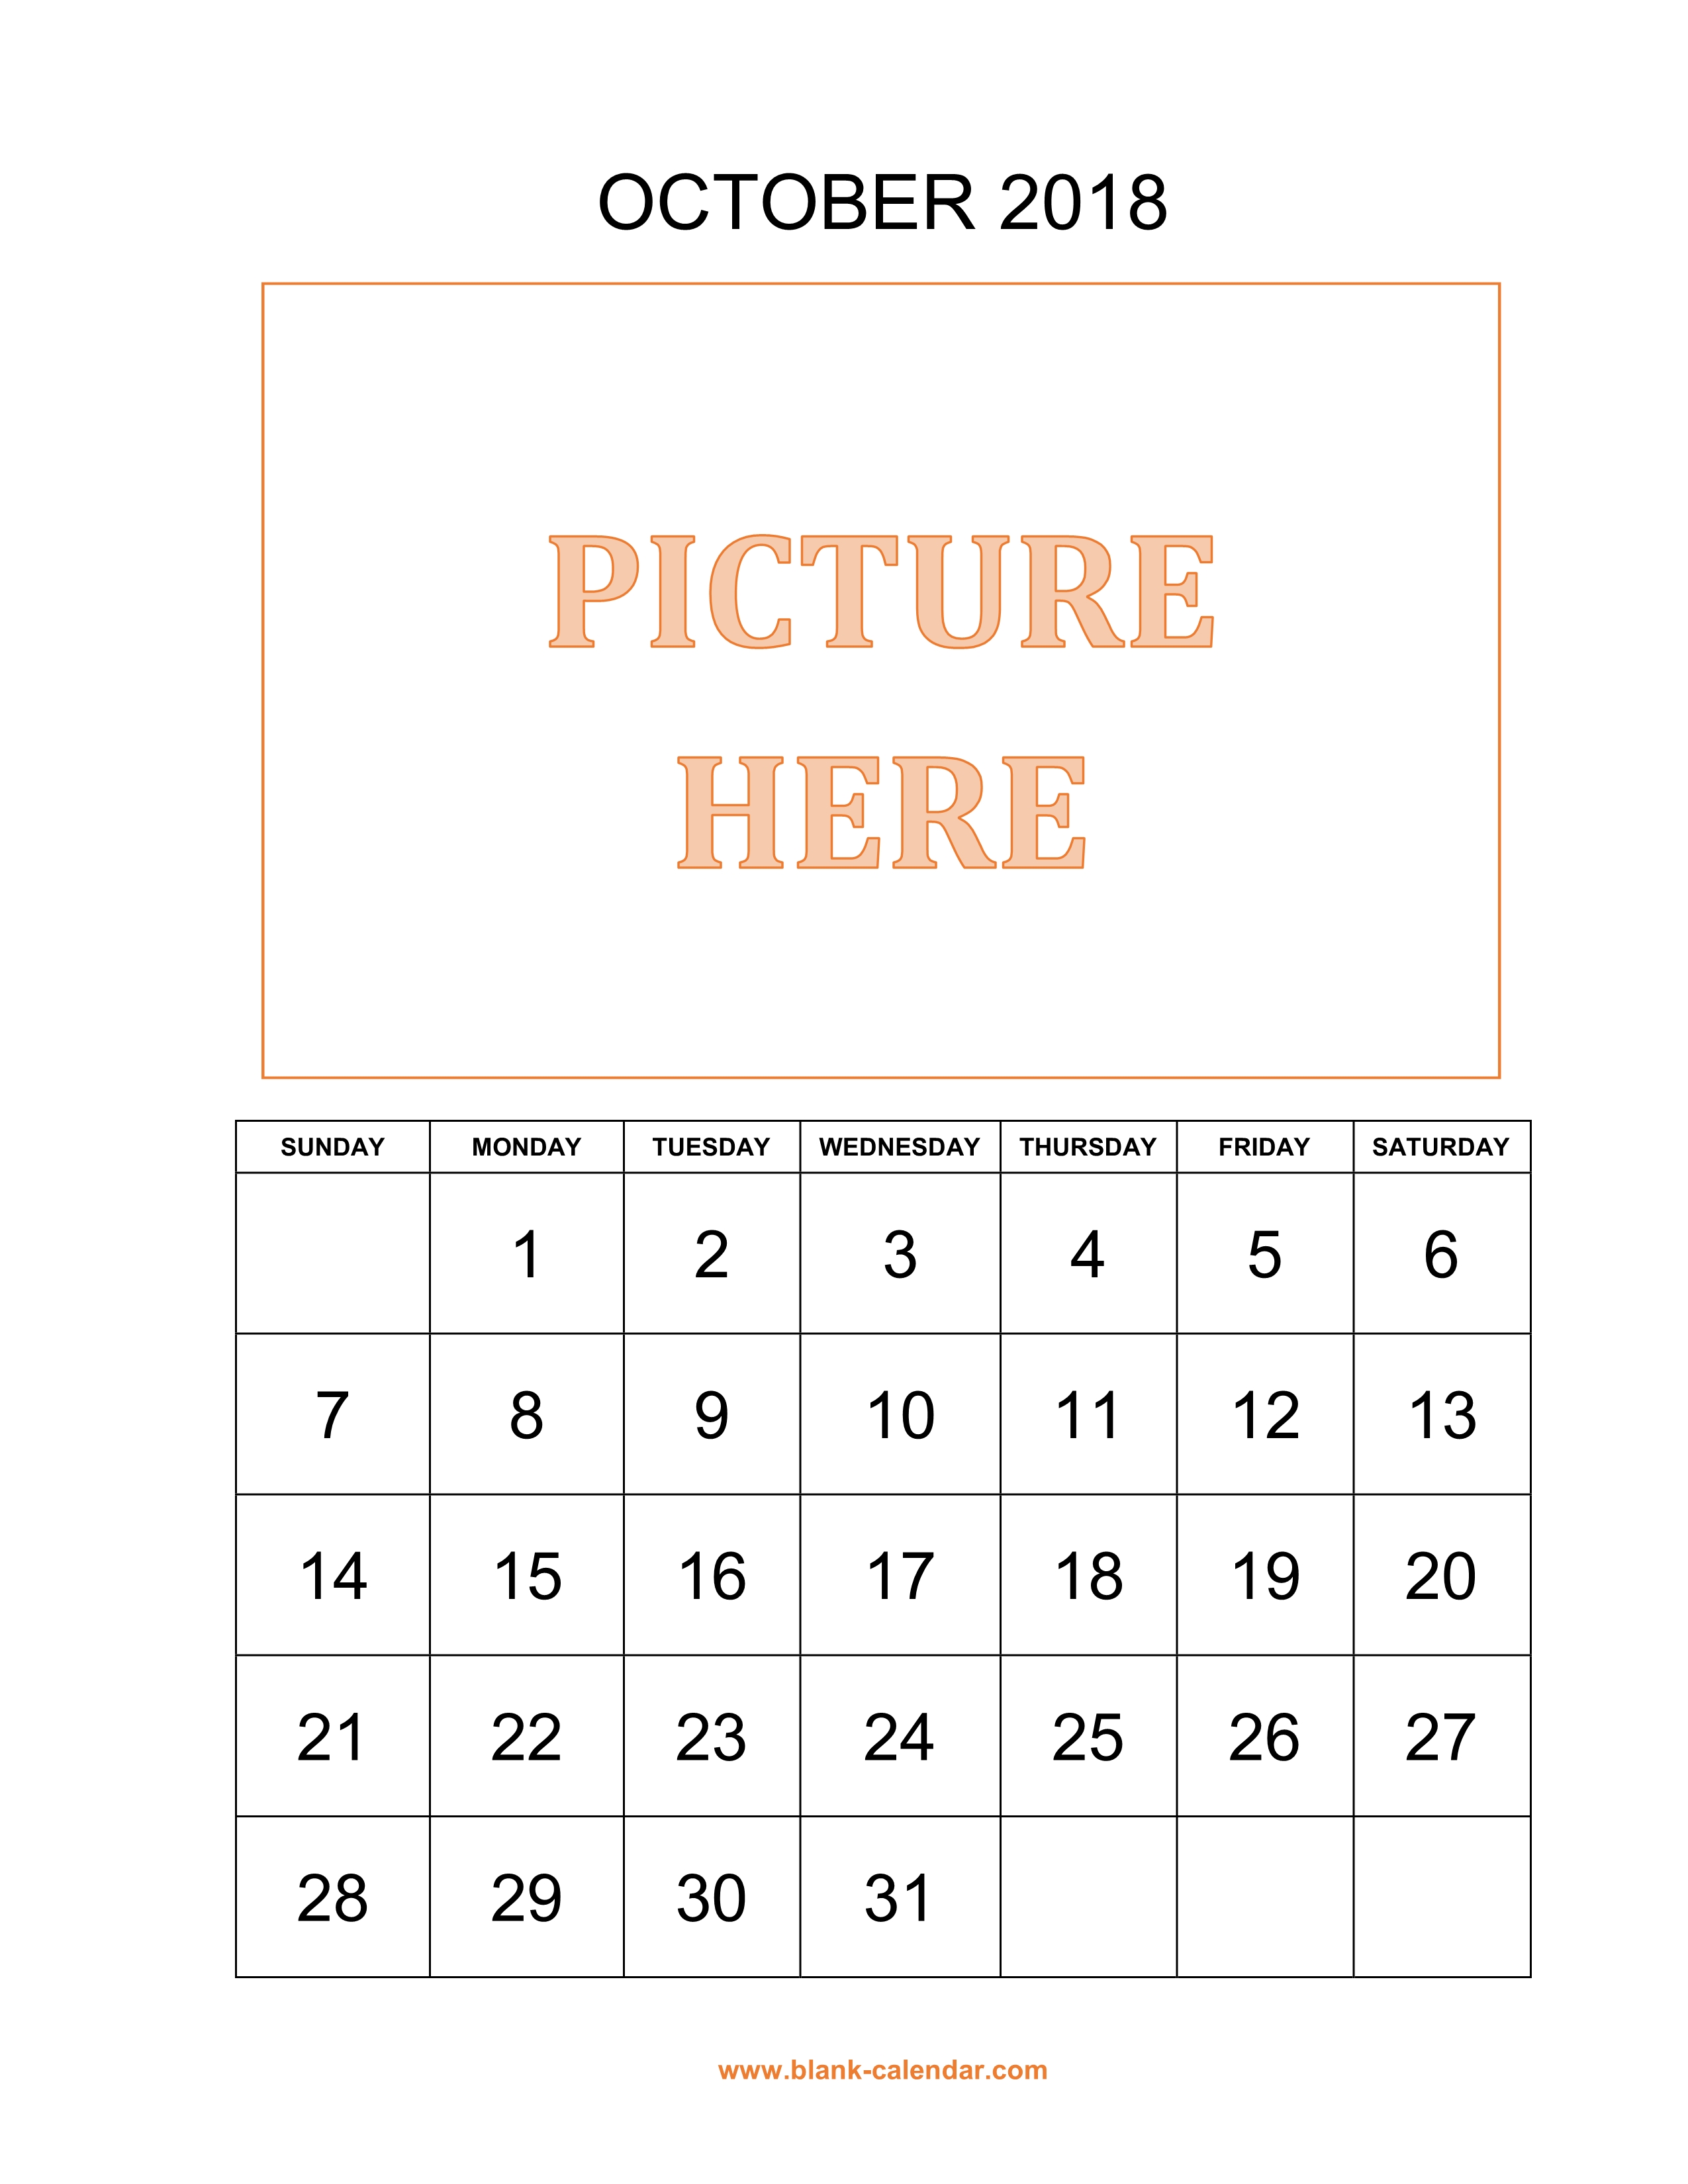 printable-october-2018-calendar-2018-october-calendar-oct-2018-calendar